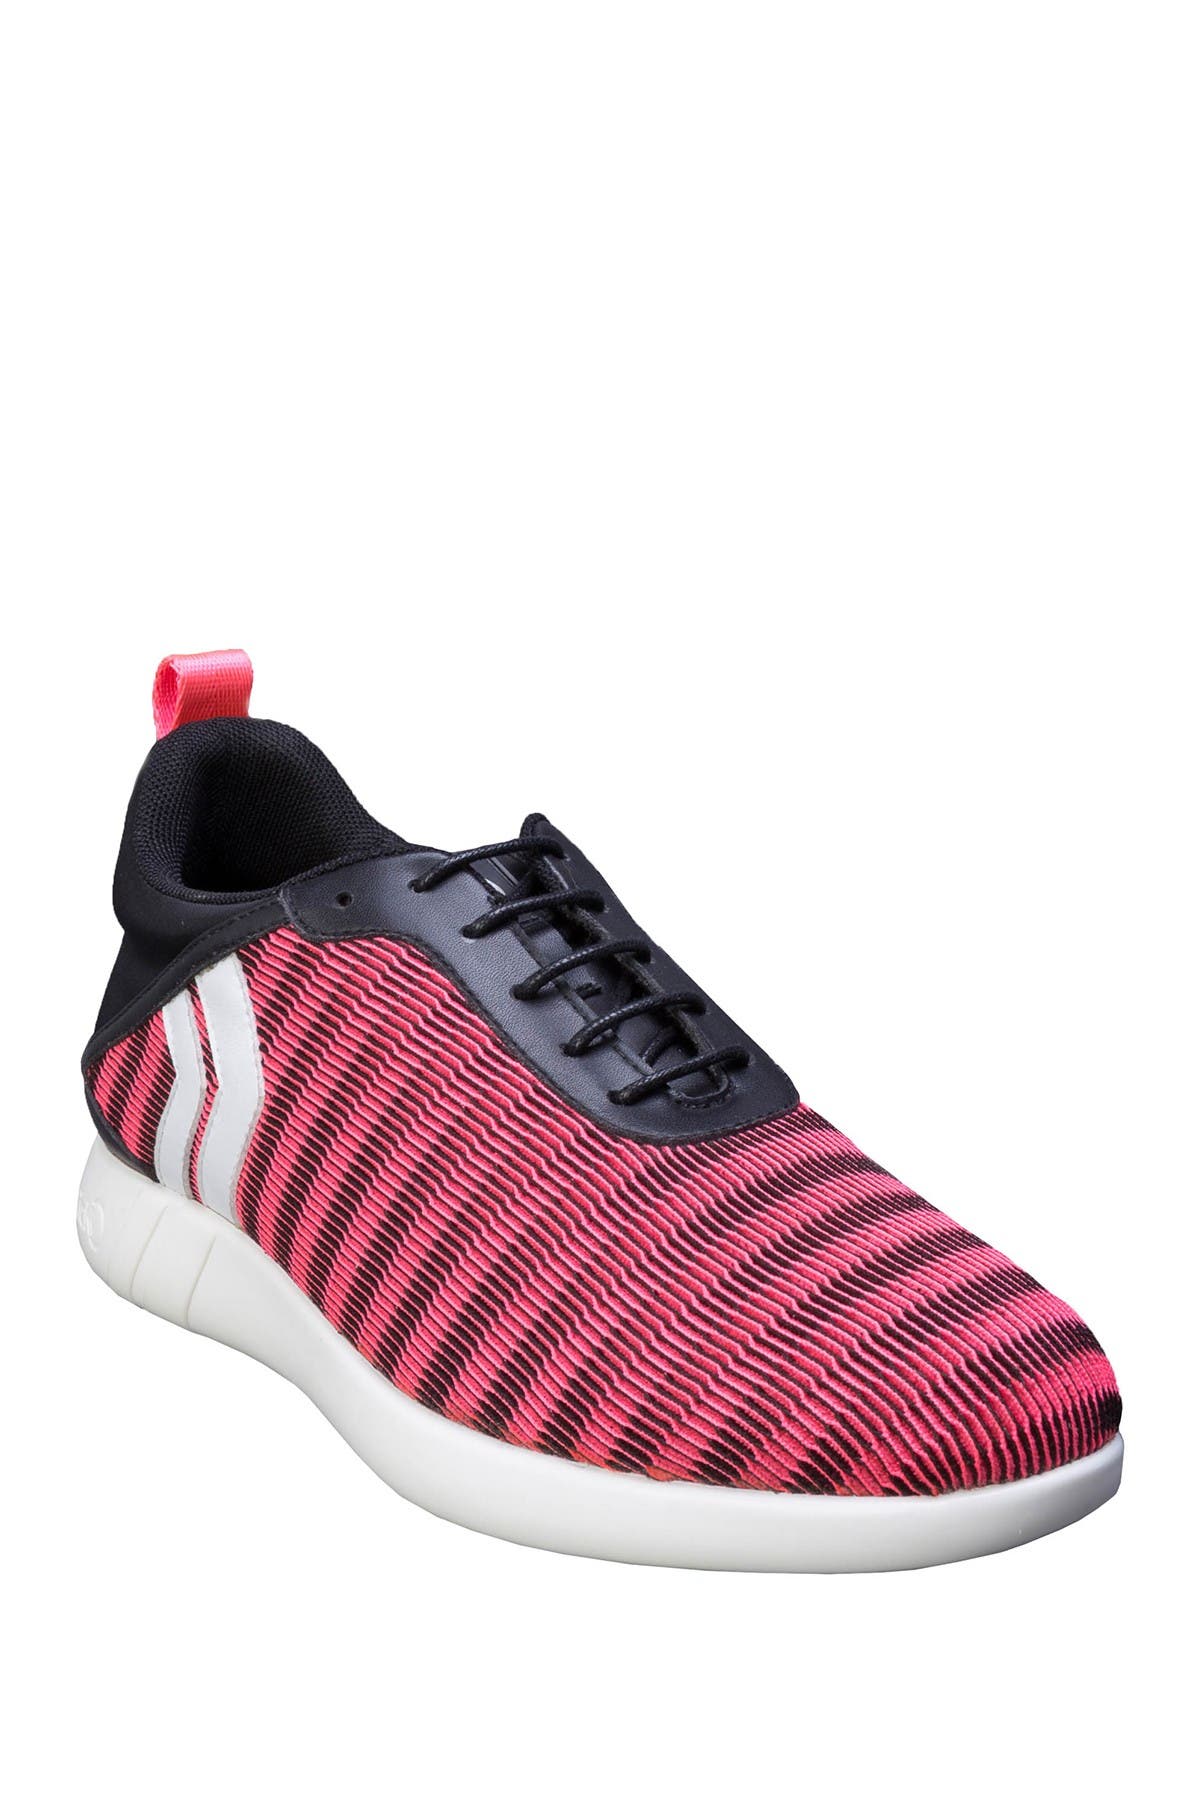 Kicko Wave Sneaker In Pink